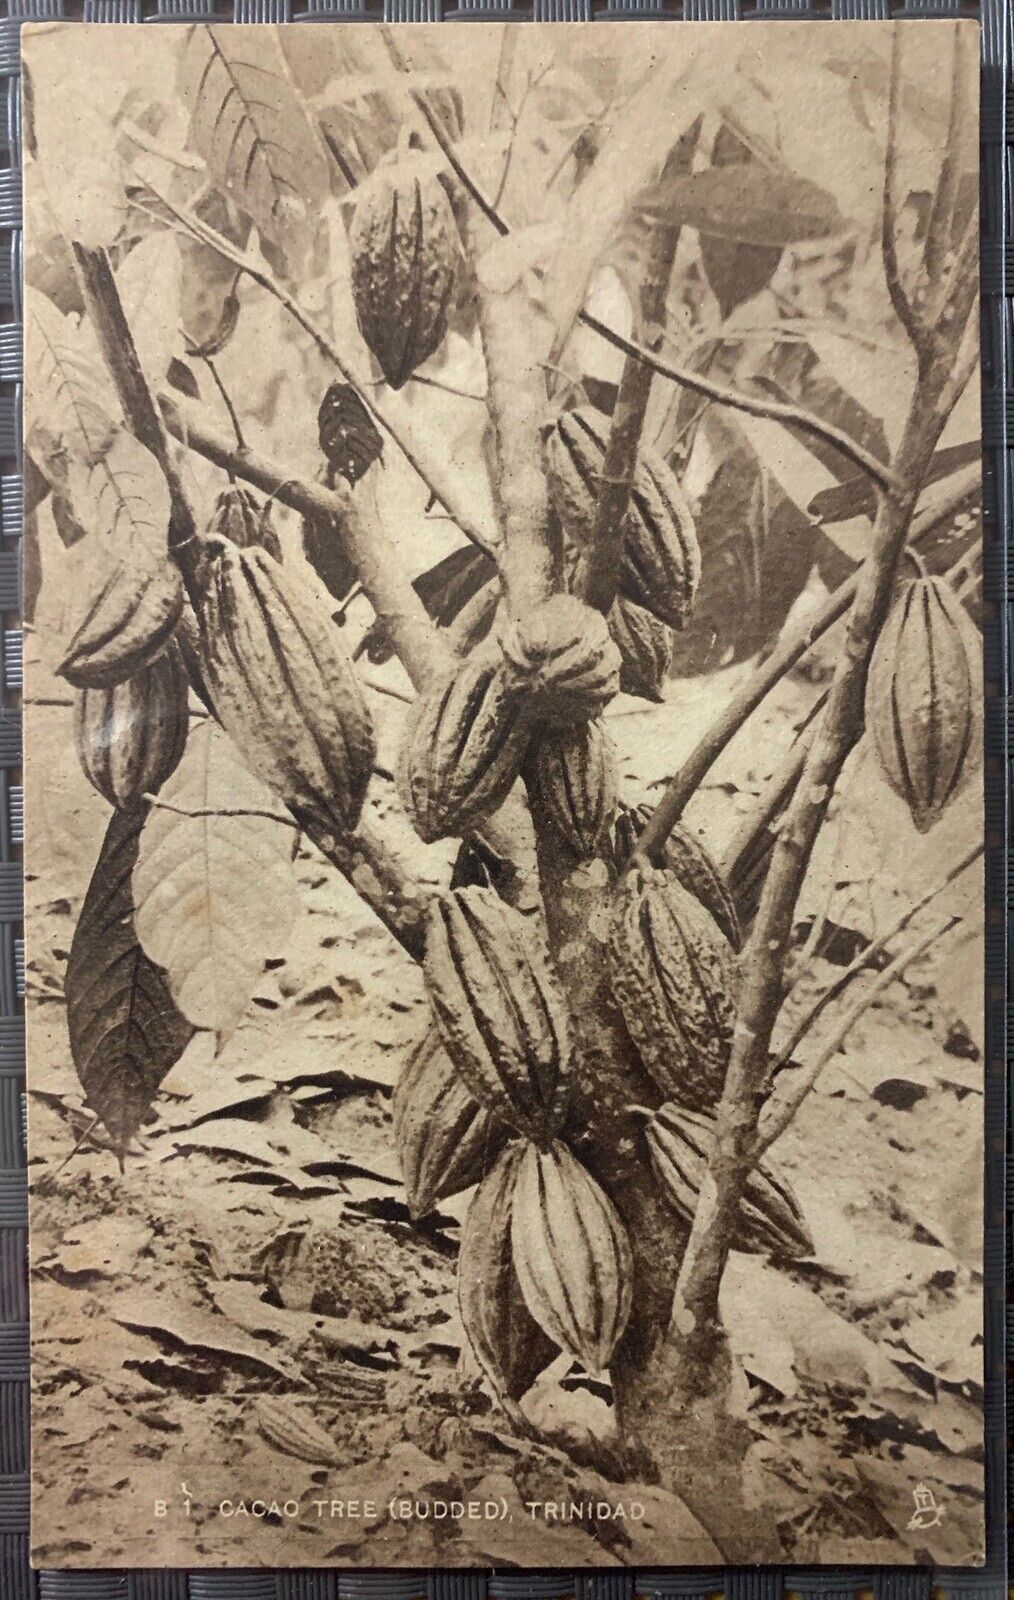 Trinidad Cacao Tree Budded Postcard - B1 Sepia - Raphael Tuck & Sons 1924